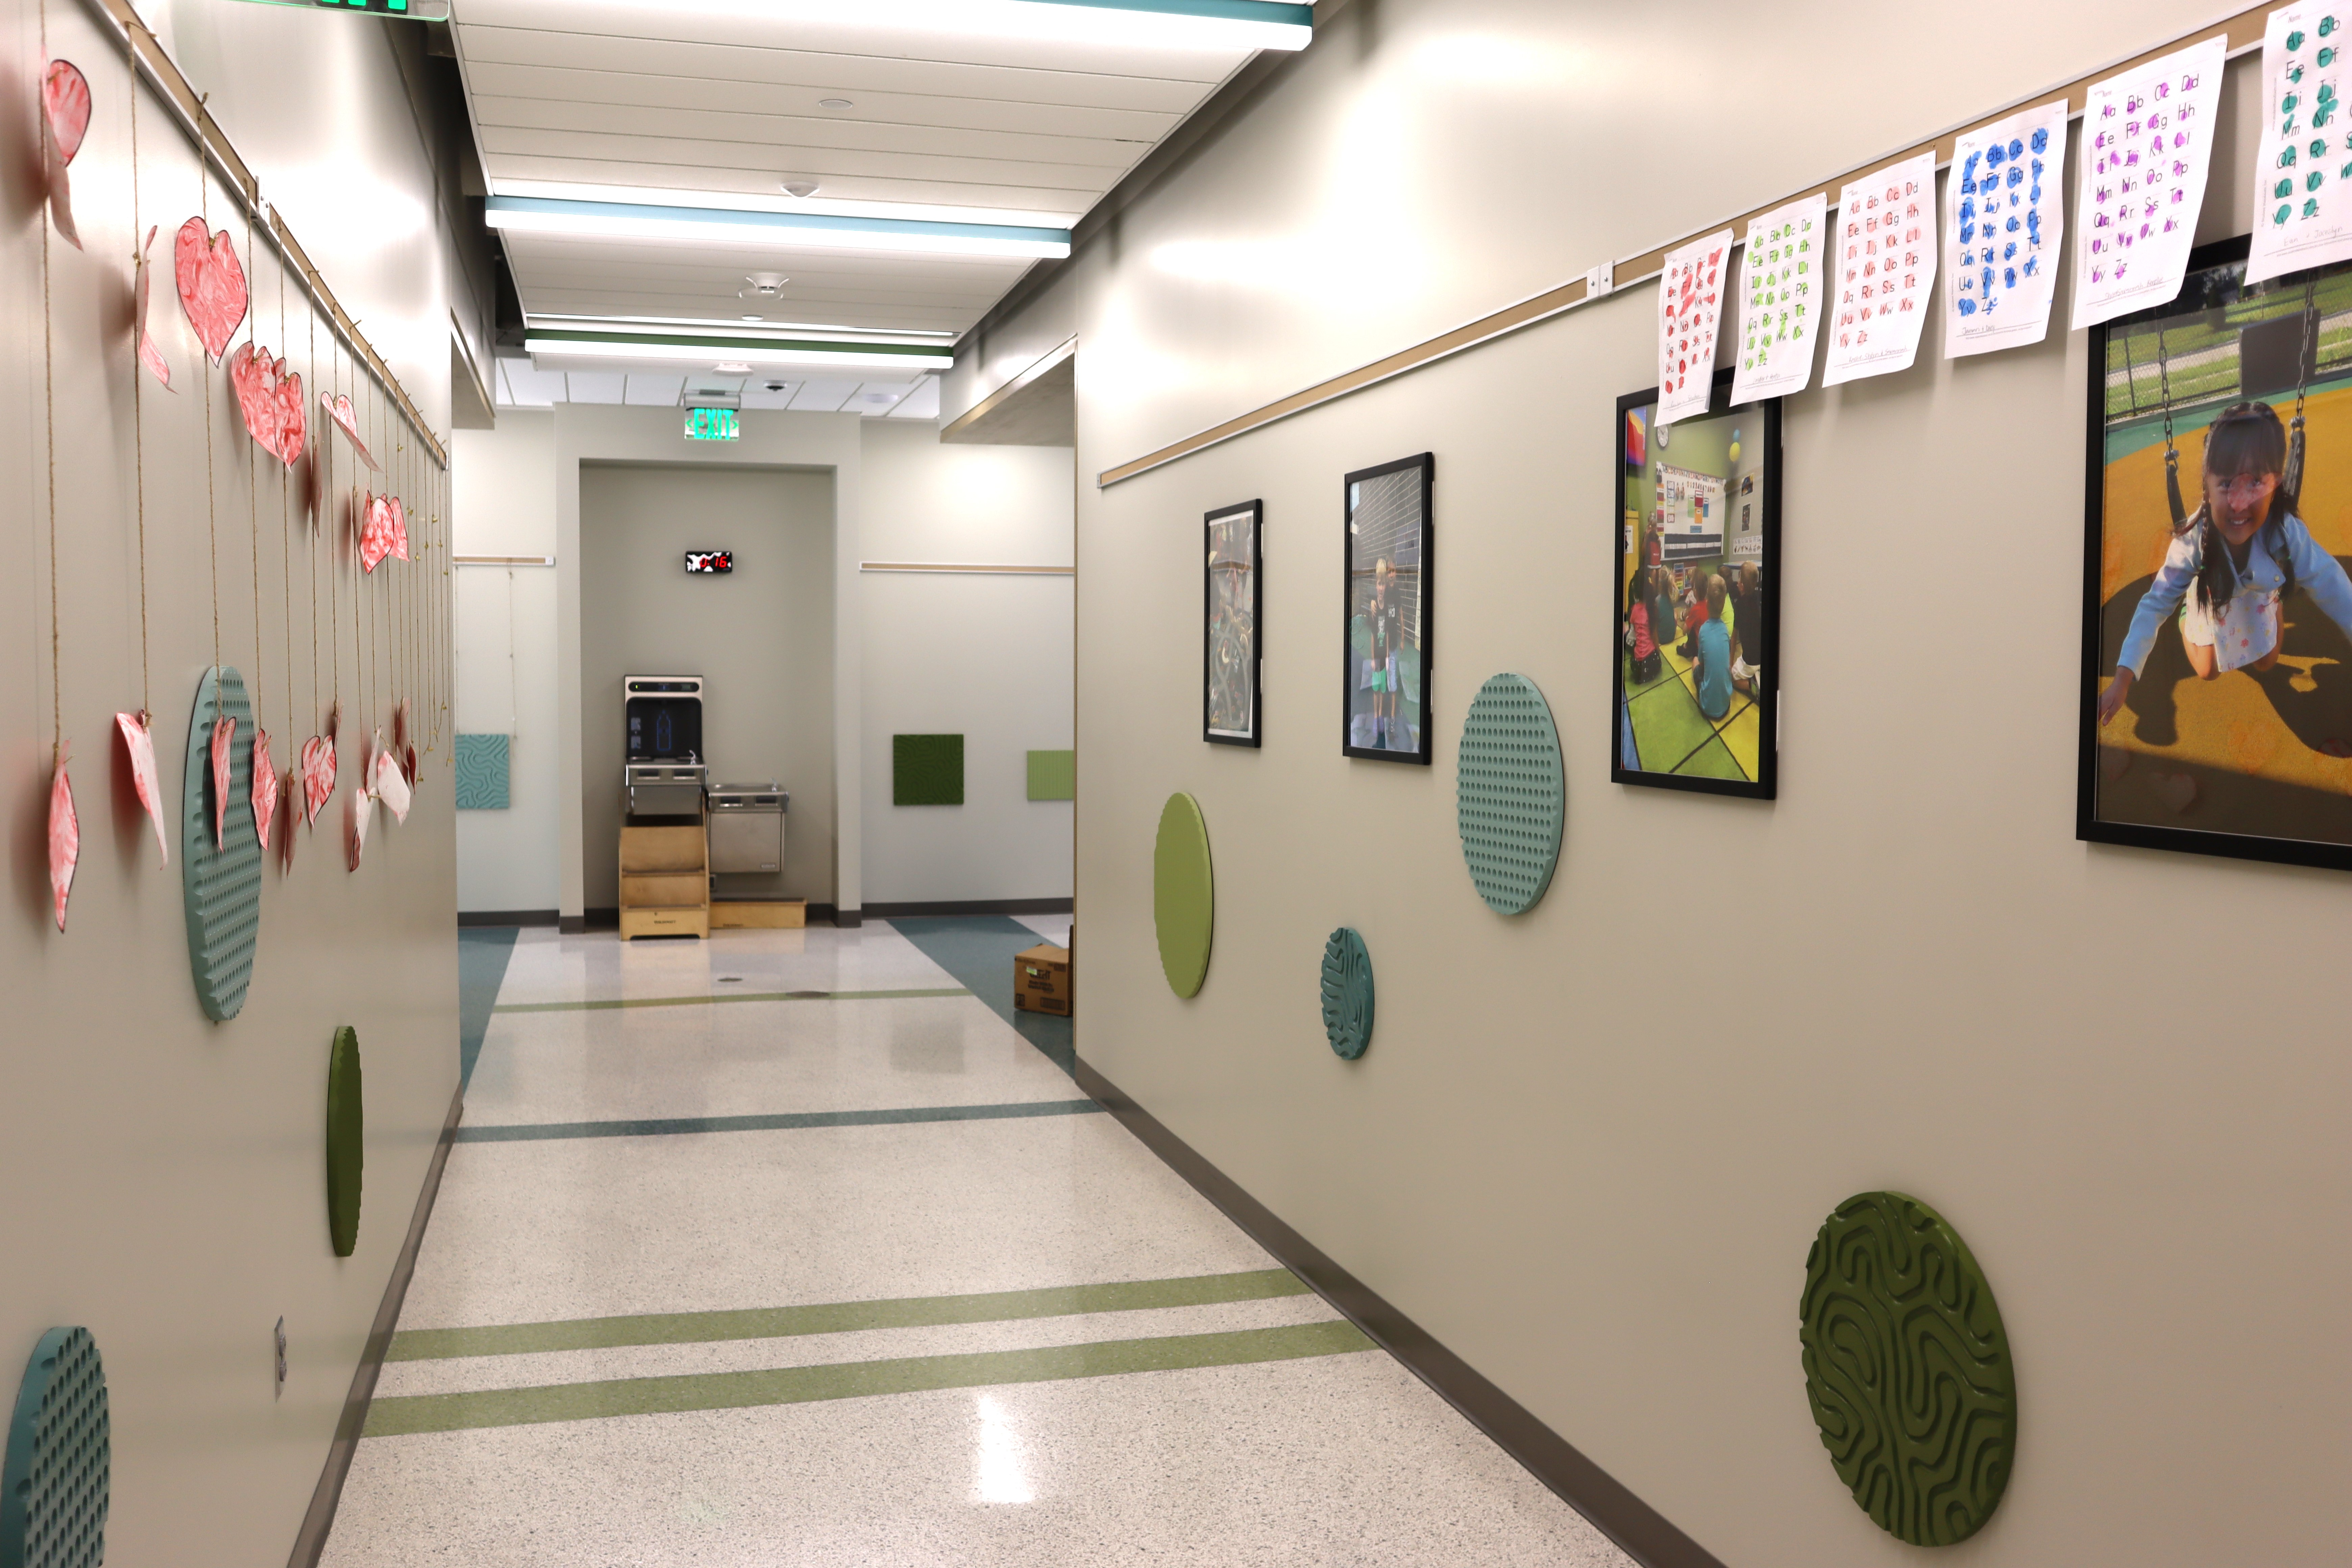 Oskaloosa Early Childhood Center interior hallway photo